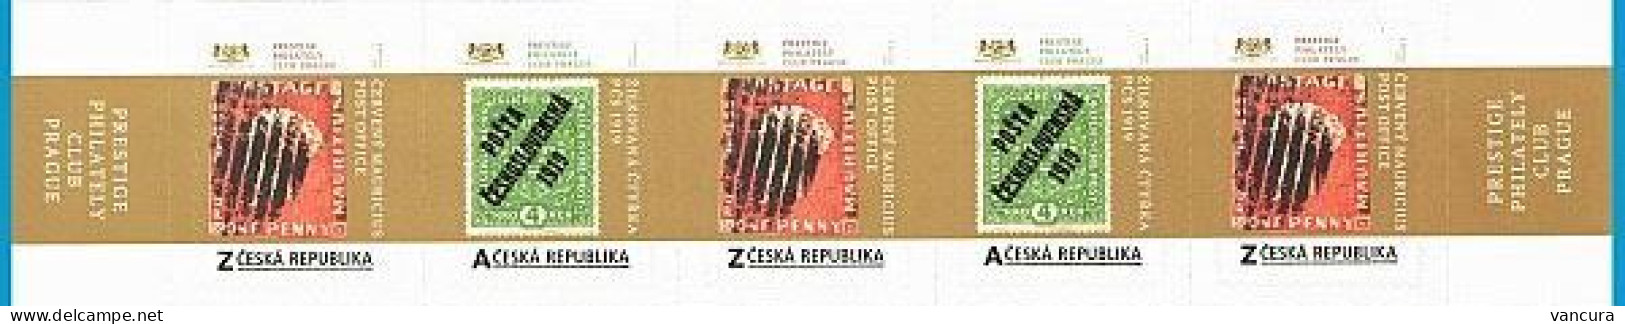 Czech Republic Treasures Of The World Philately 2020 - Postzegels Op Postzegels